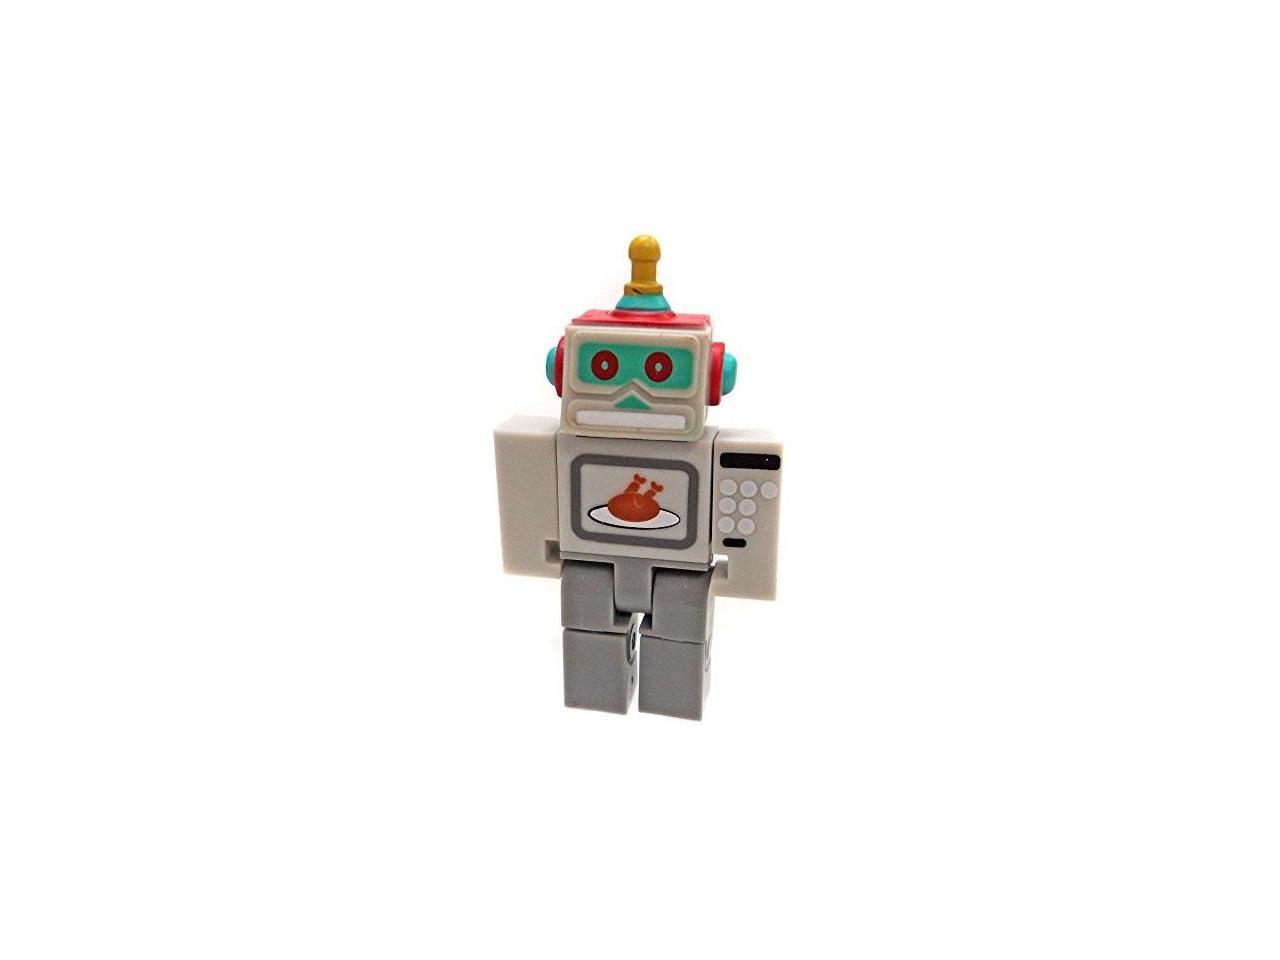 Roblox Series 2 Microwave Spybot Action Figure Mystery Box Virtual Item Code 2 5 Newegg Com - microwave spybot roblox